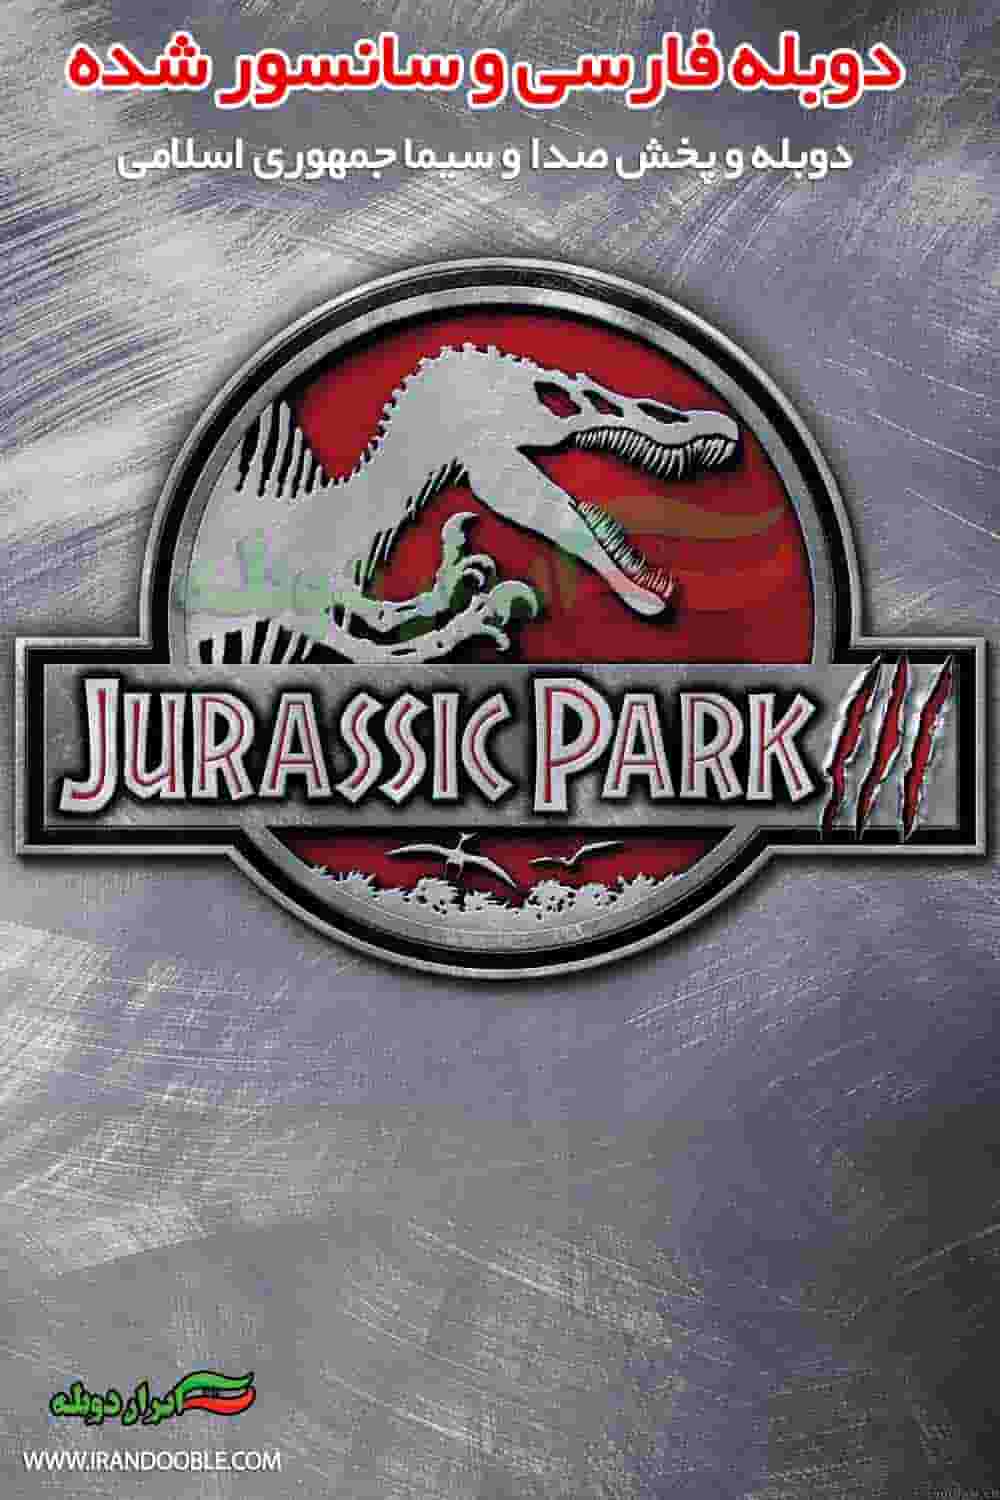 Jurassic Park 3 2001-irandooble (2)